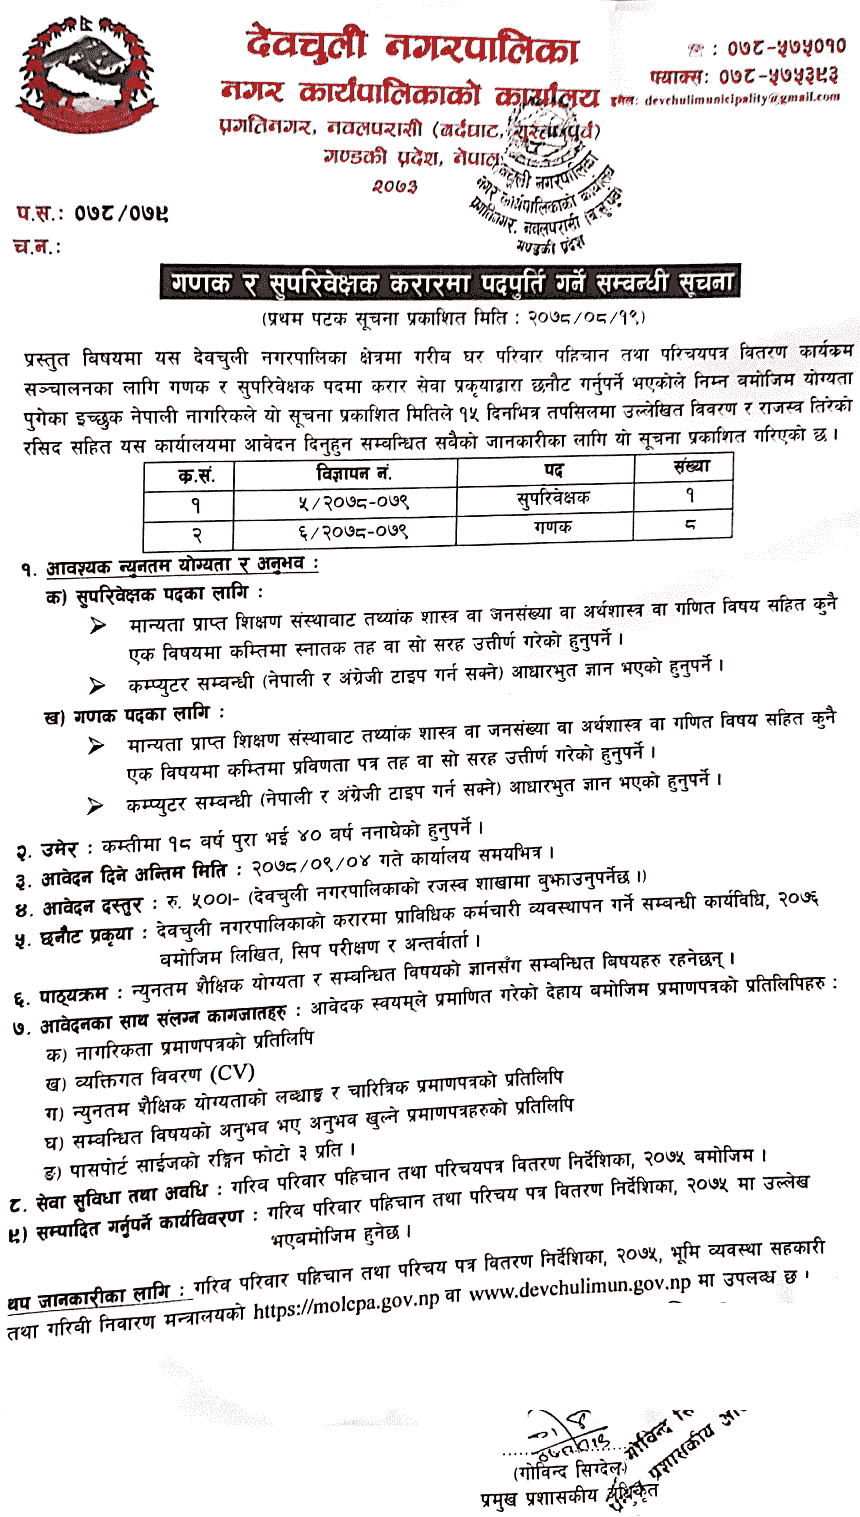 Devchuli Municipality Vacancy for Ganak and Supervisor